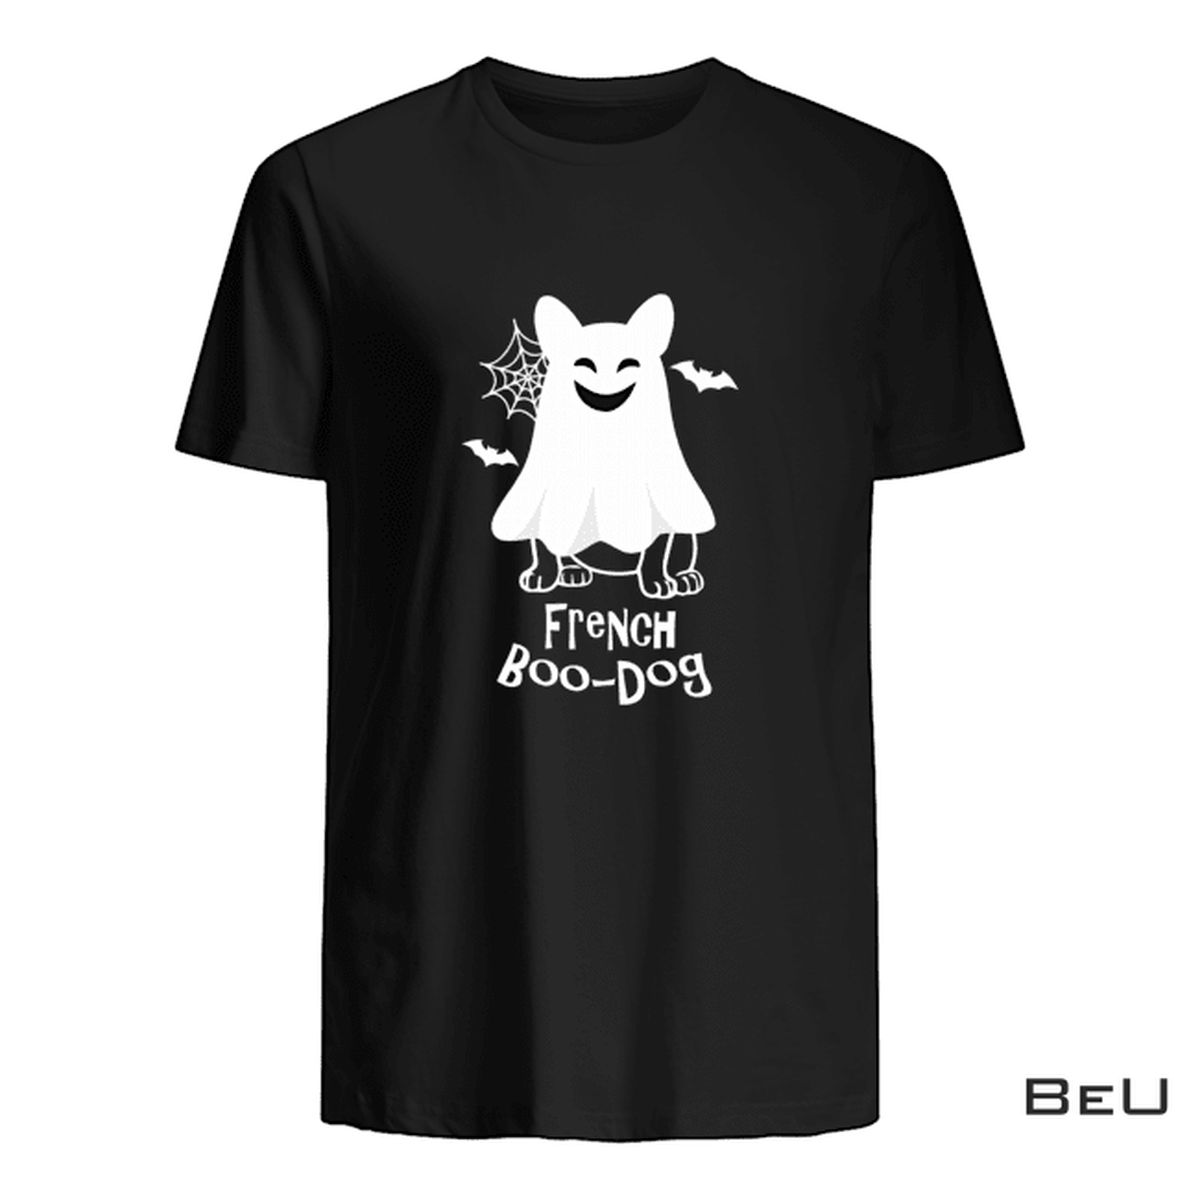 French Boo-dog Halloween Shirt